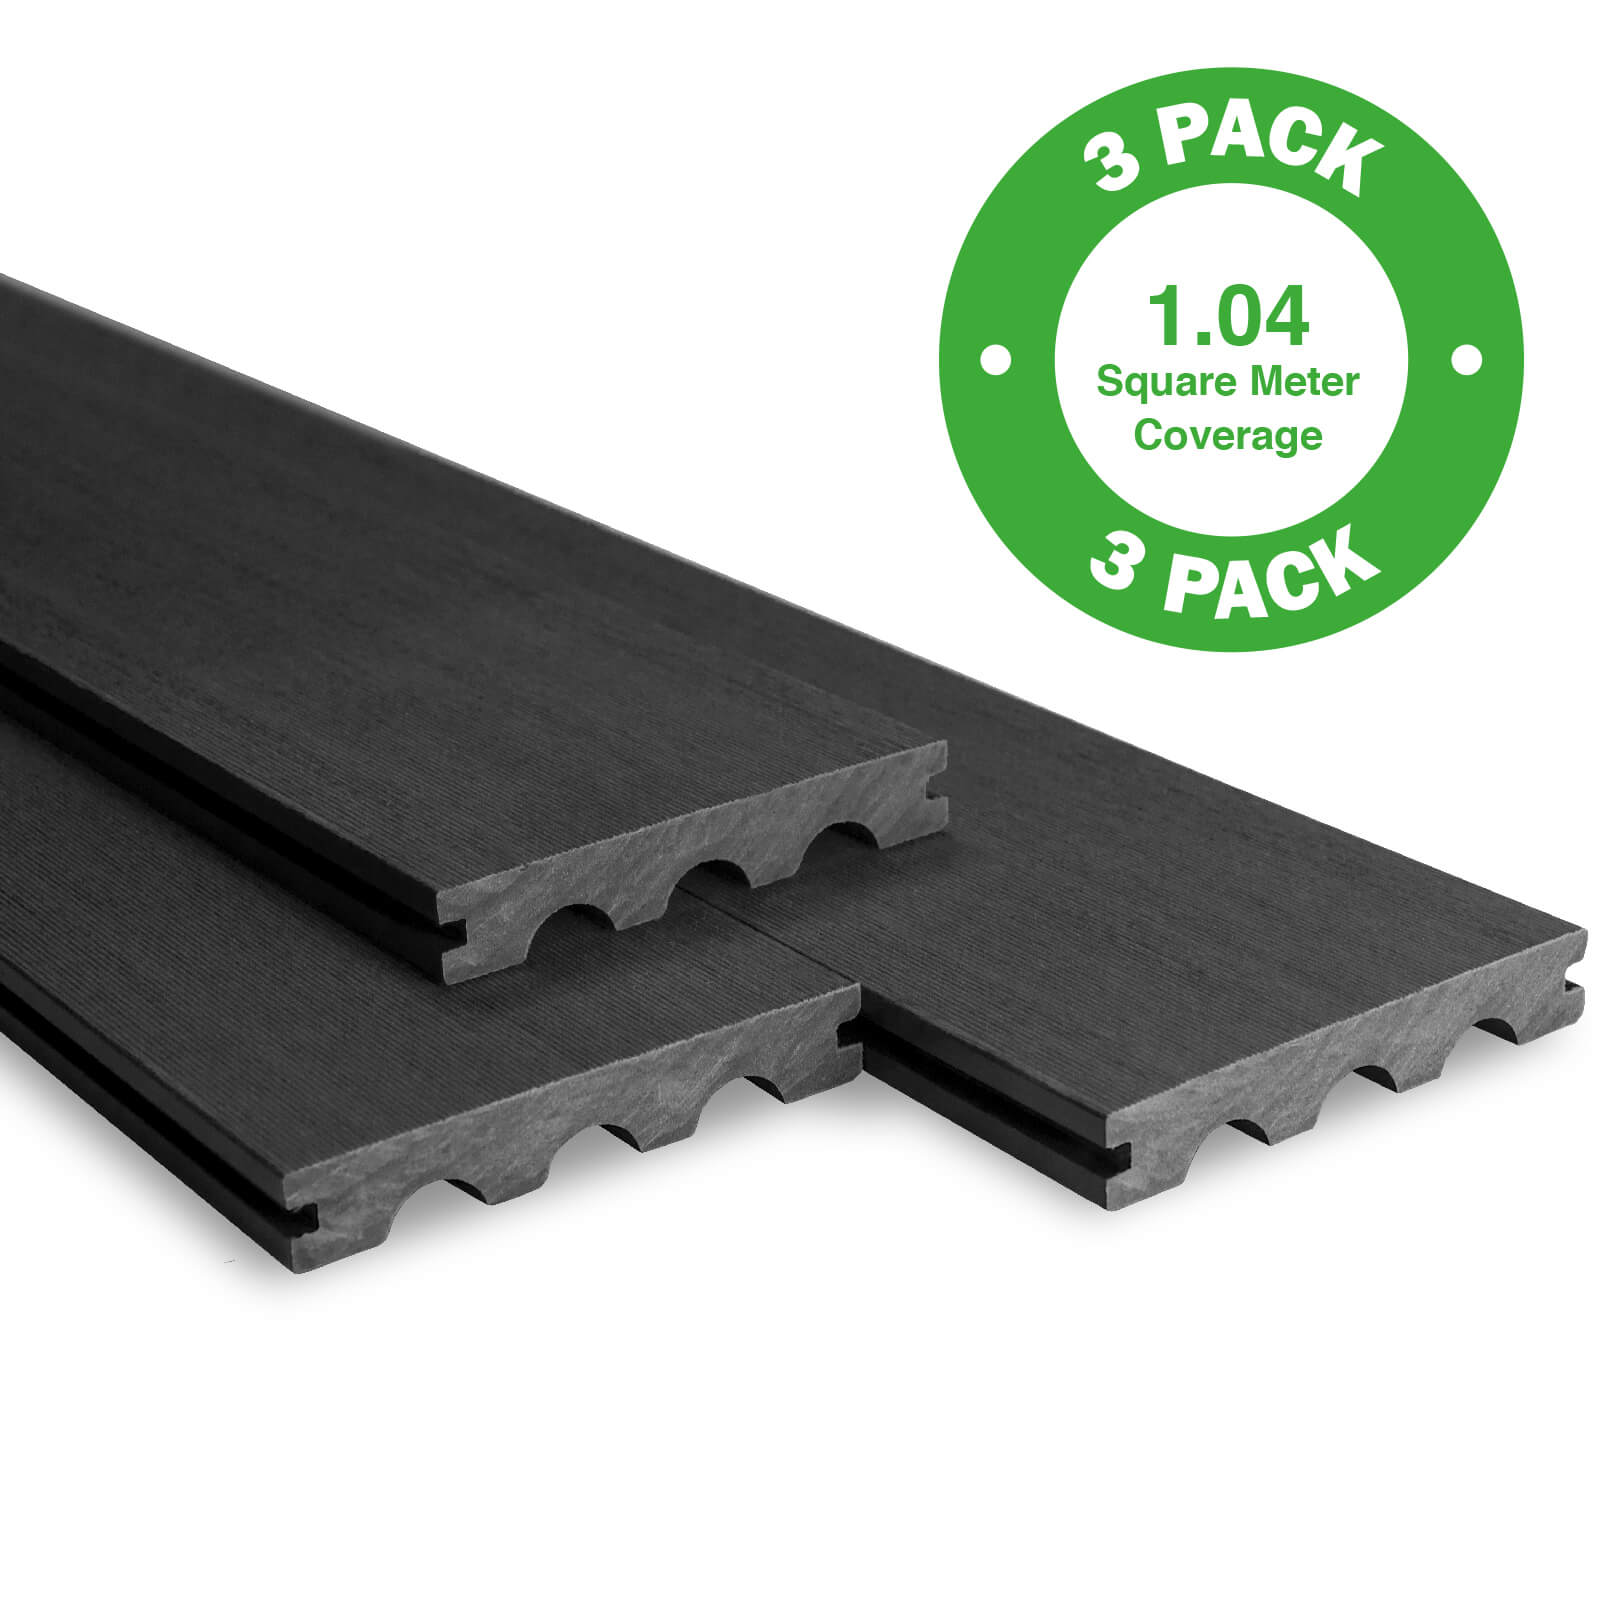 Photo of Bridge Board Composite Decking - 3 Pack - Ebony - 1.04 M2